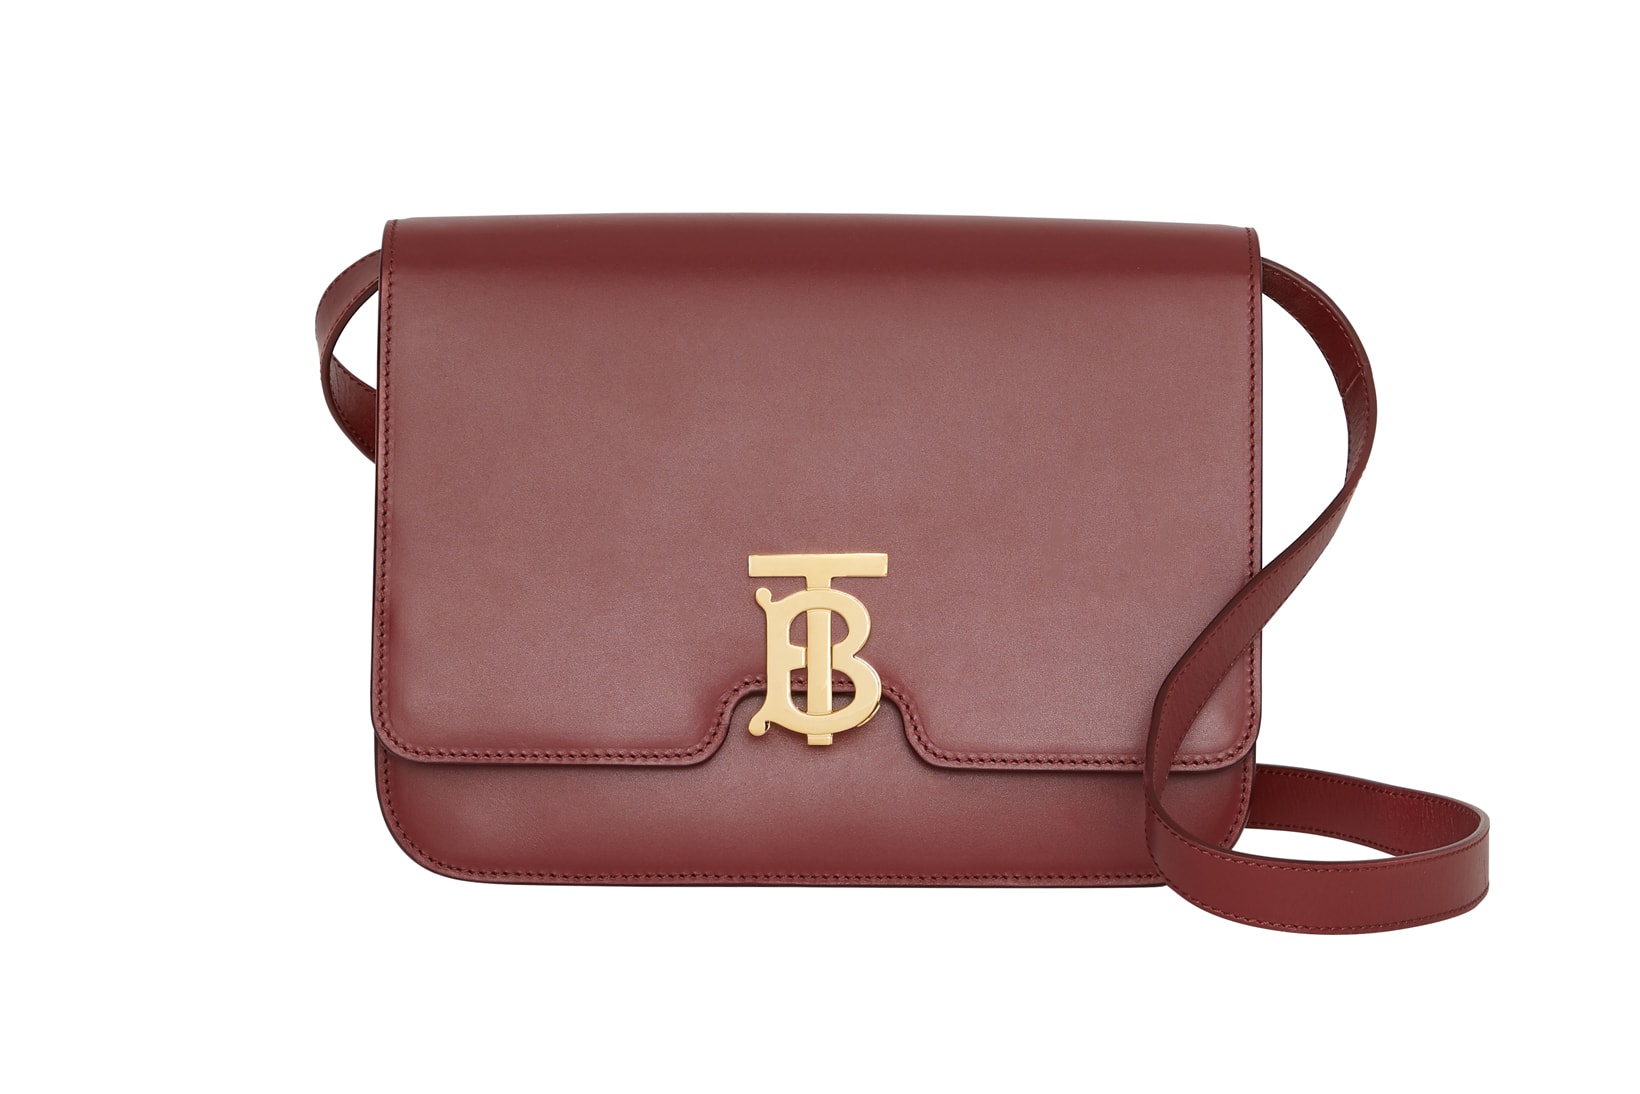 Burberry Small Leather TB Bag Crimson